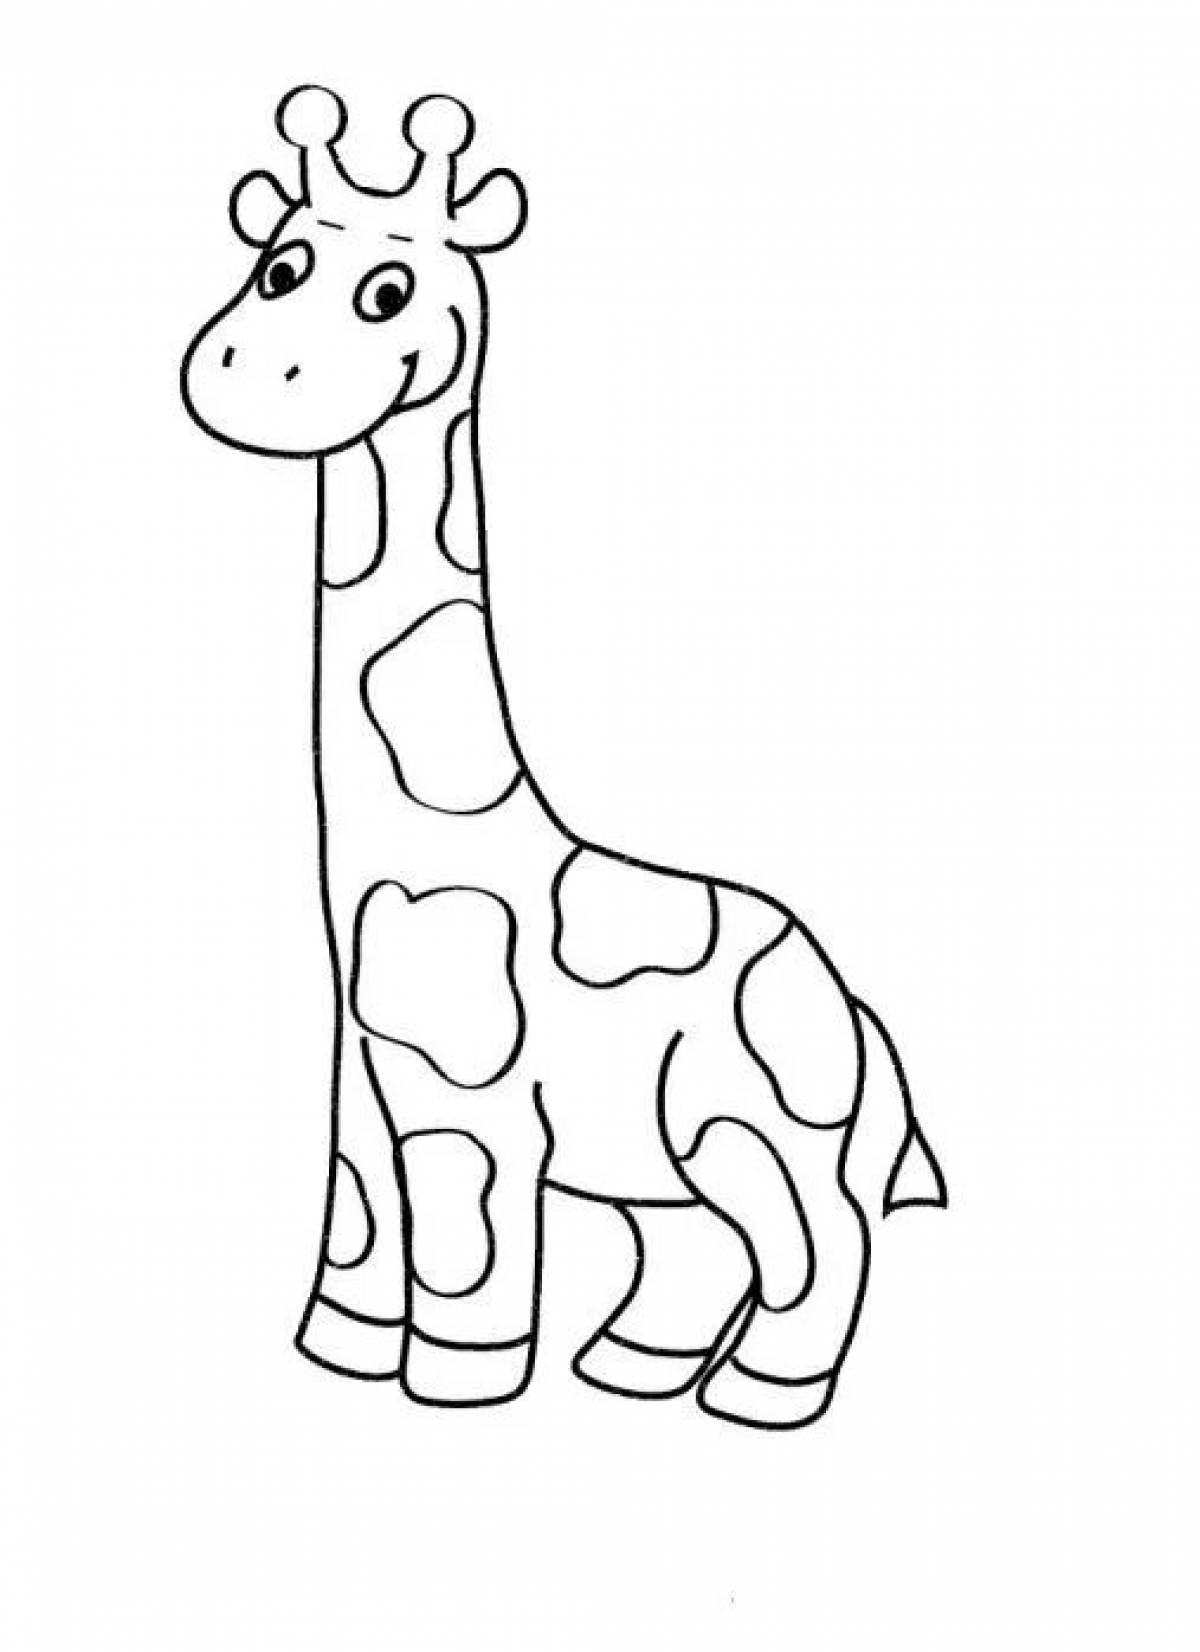 Great coloring giraffe for kids